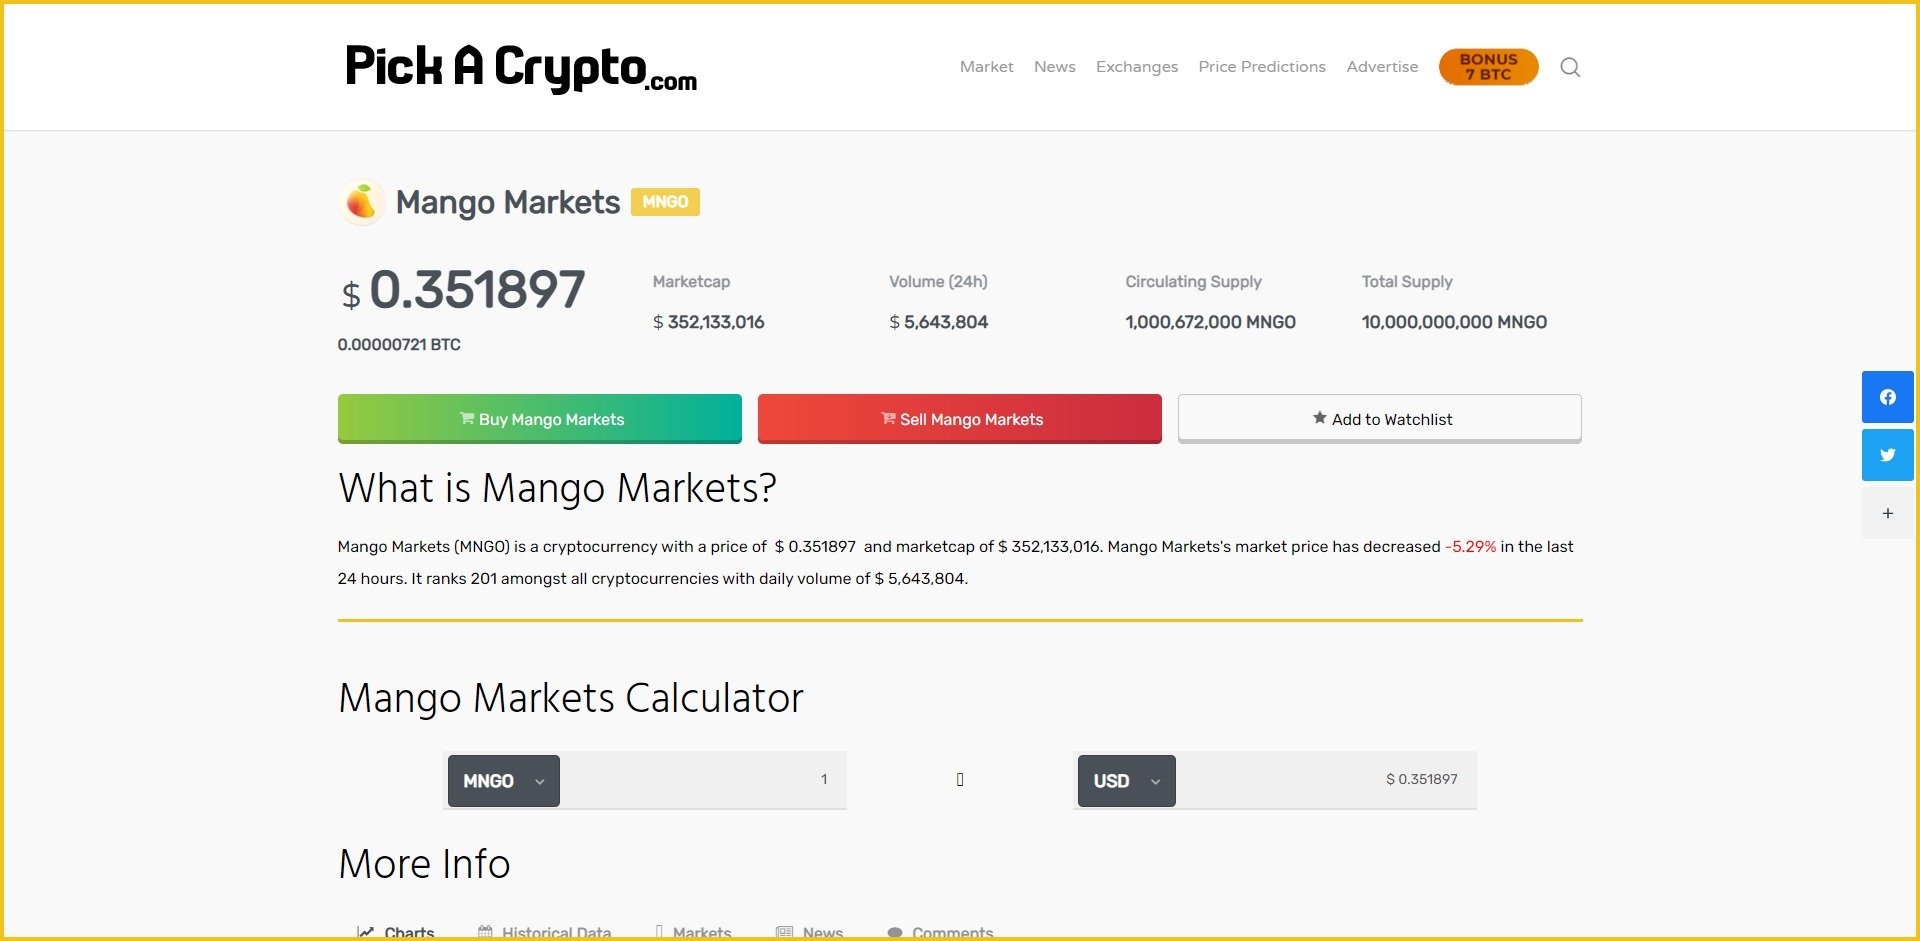 Mango Markets MNGO Price Prediction Market